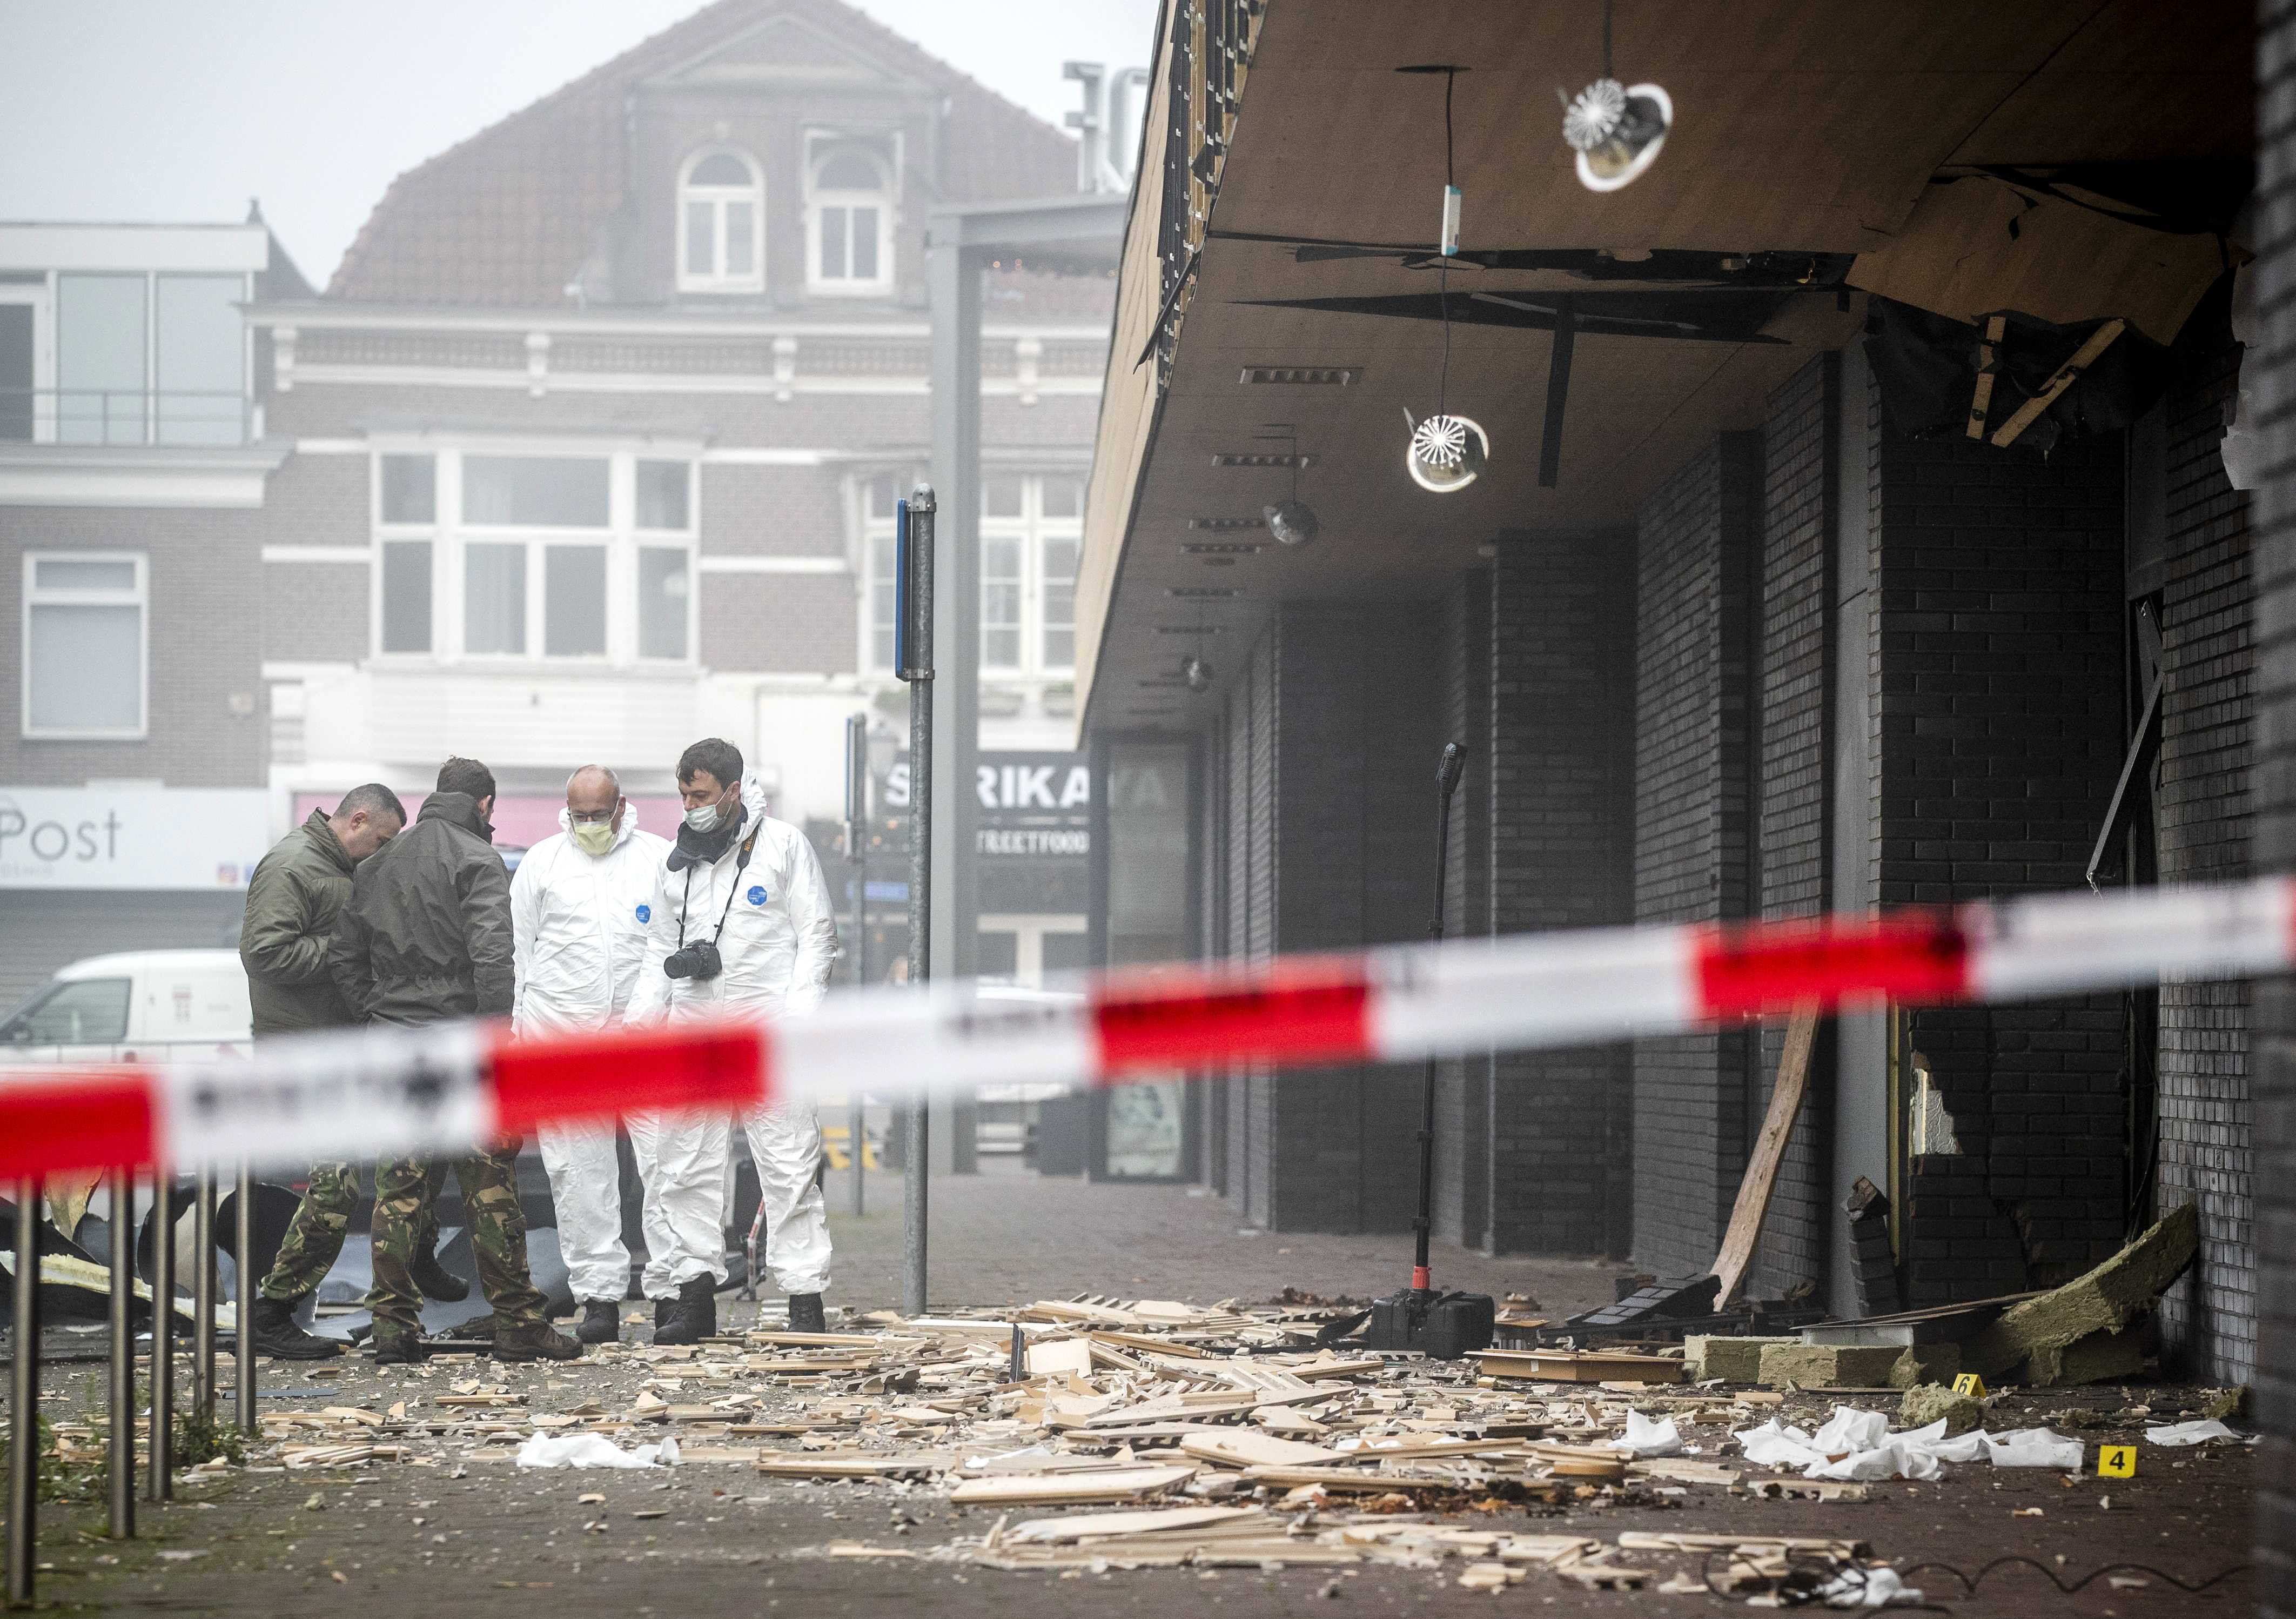 Holandia. Ponowny atak na polski supermarket - Wiadomości